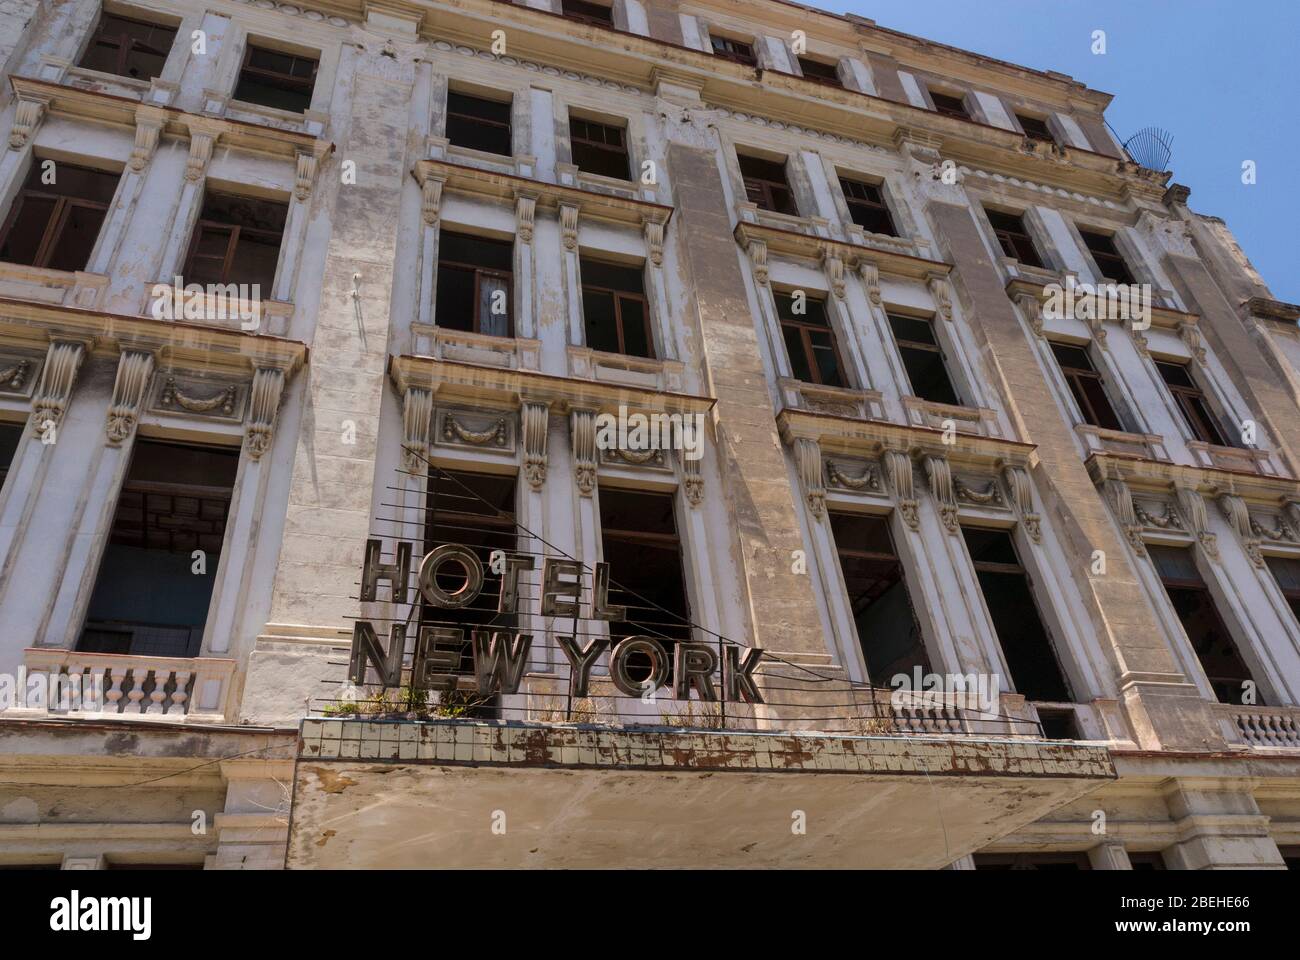 New York Hotel, abandoned building. La Habana. Cuba Stock Photo